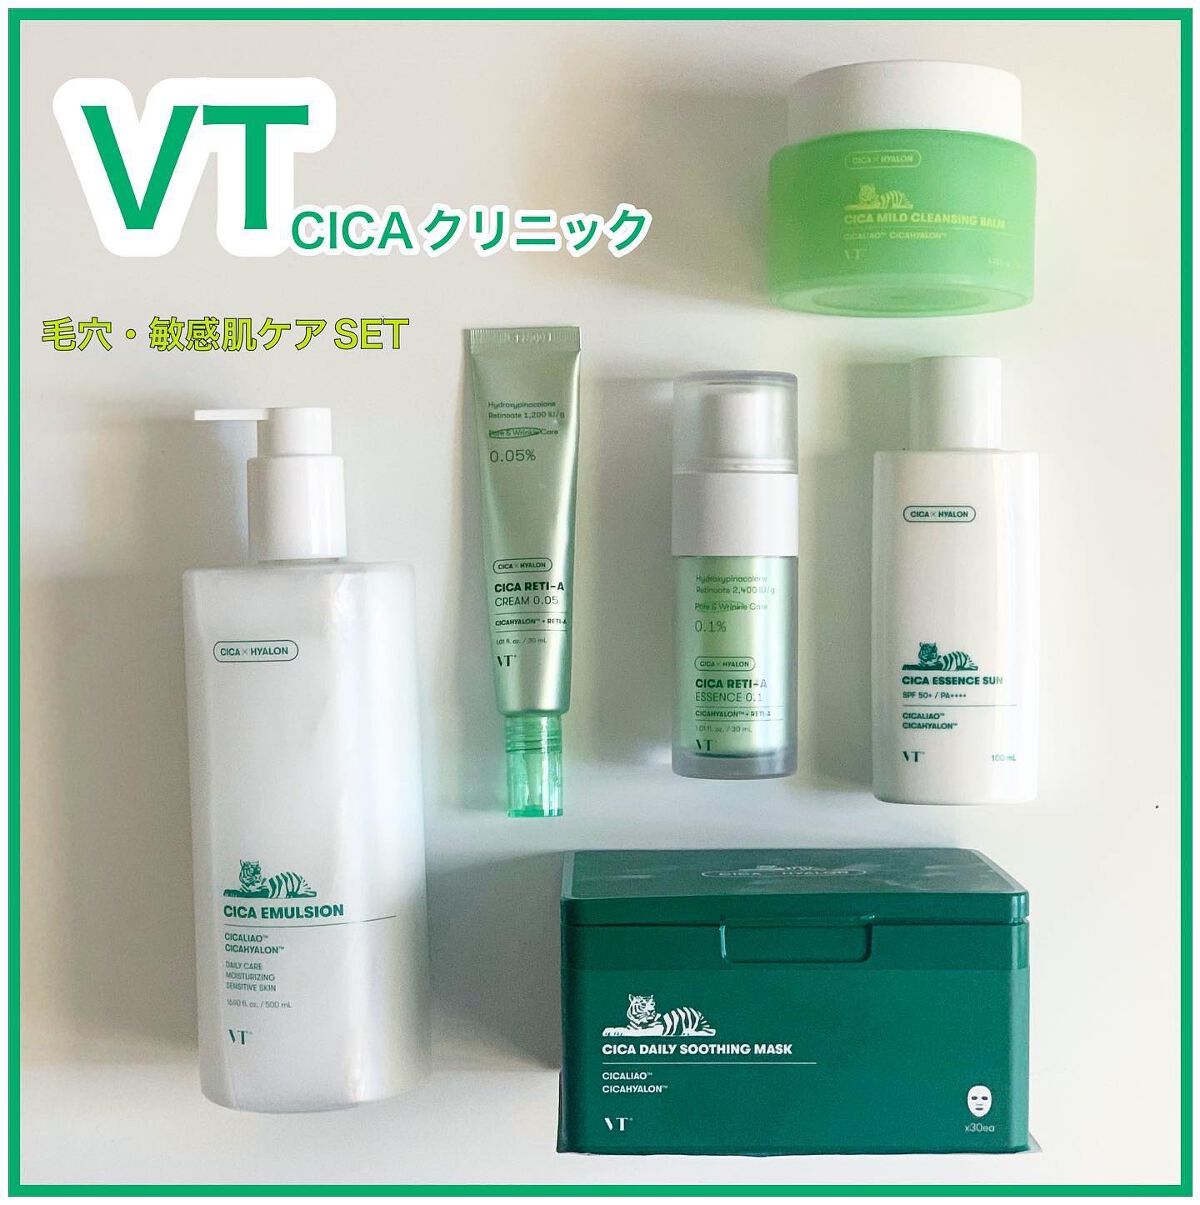 VTのスキンケア・基礎化粧品 CICA デイリースージングマスク他、4商品